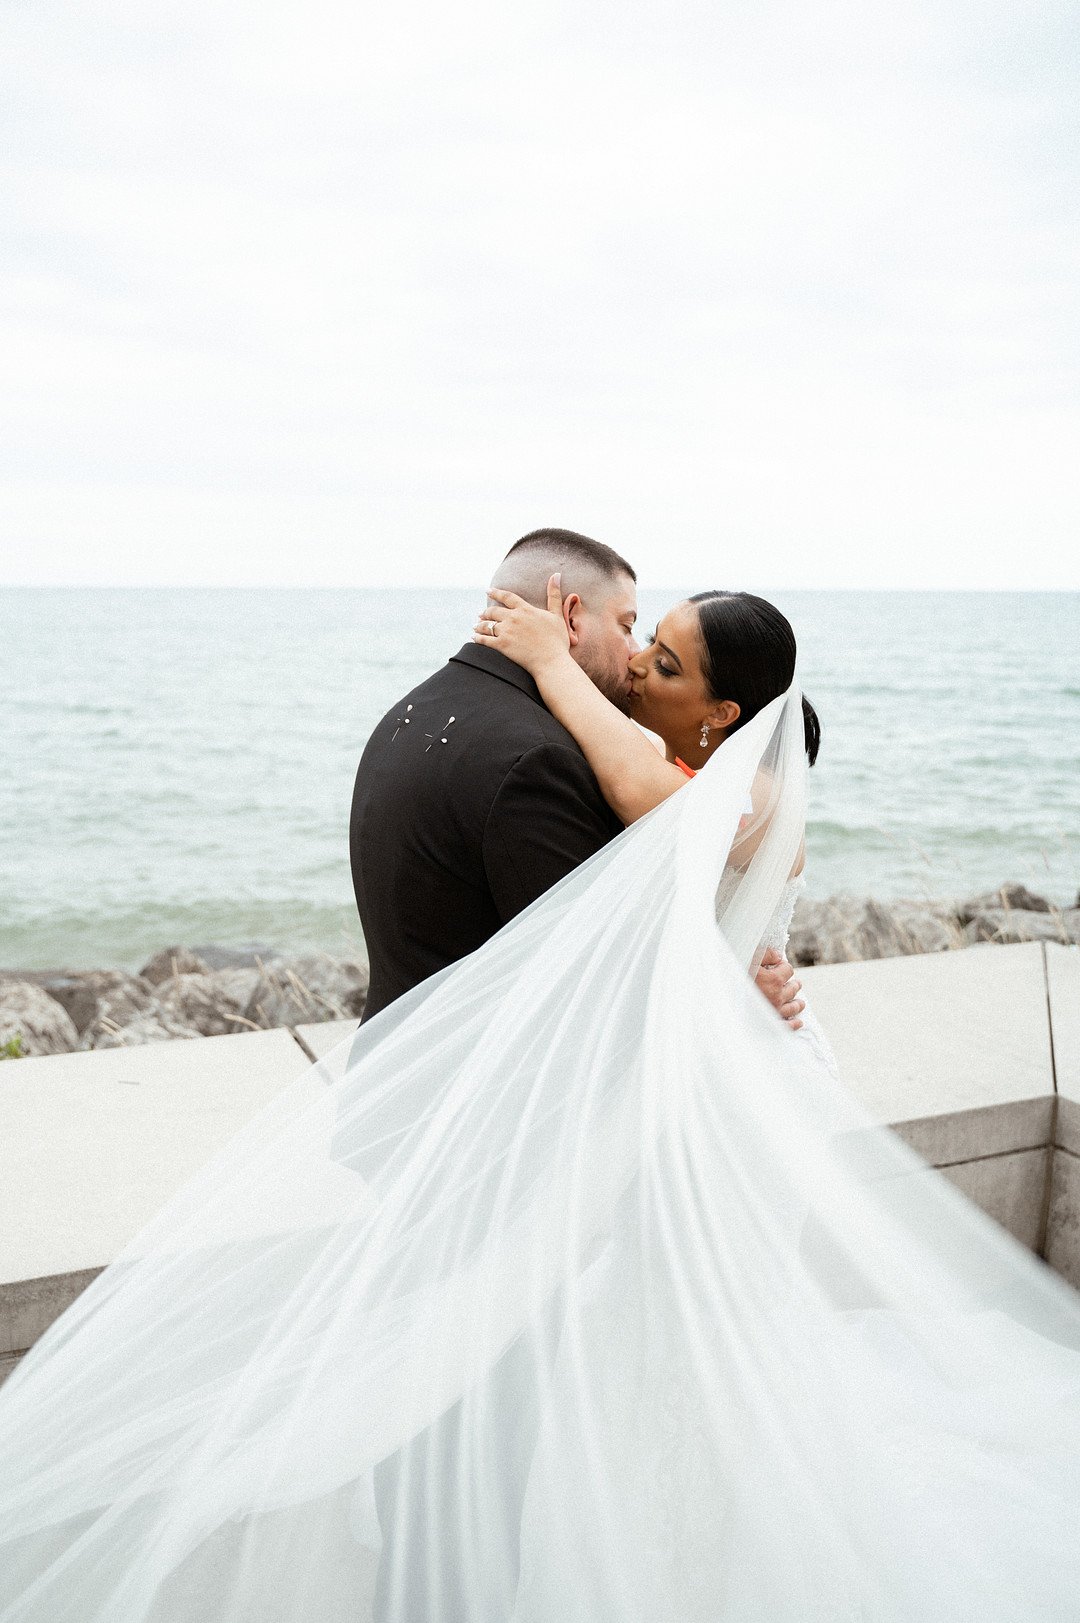 Youkhana_Jadou_Essi Photography_Rina-George-Assyrian-Wedding-Chicago-0130_low.jpg